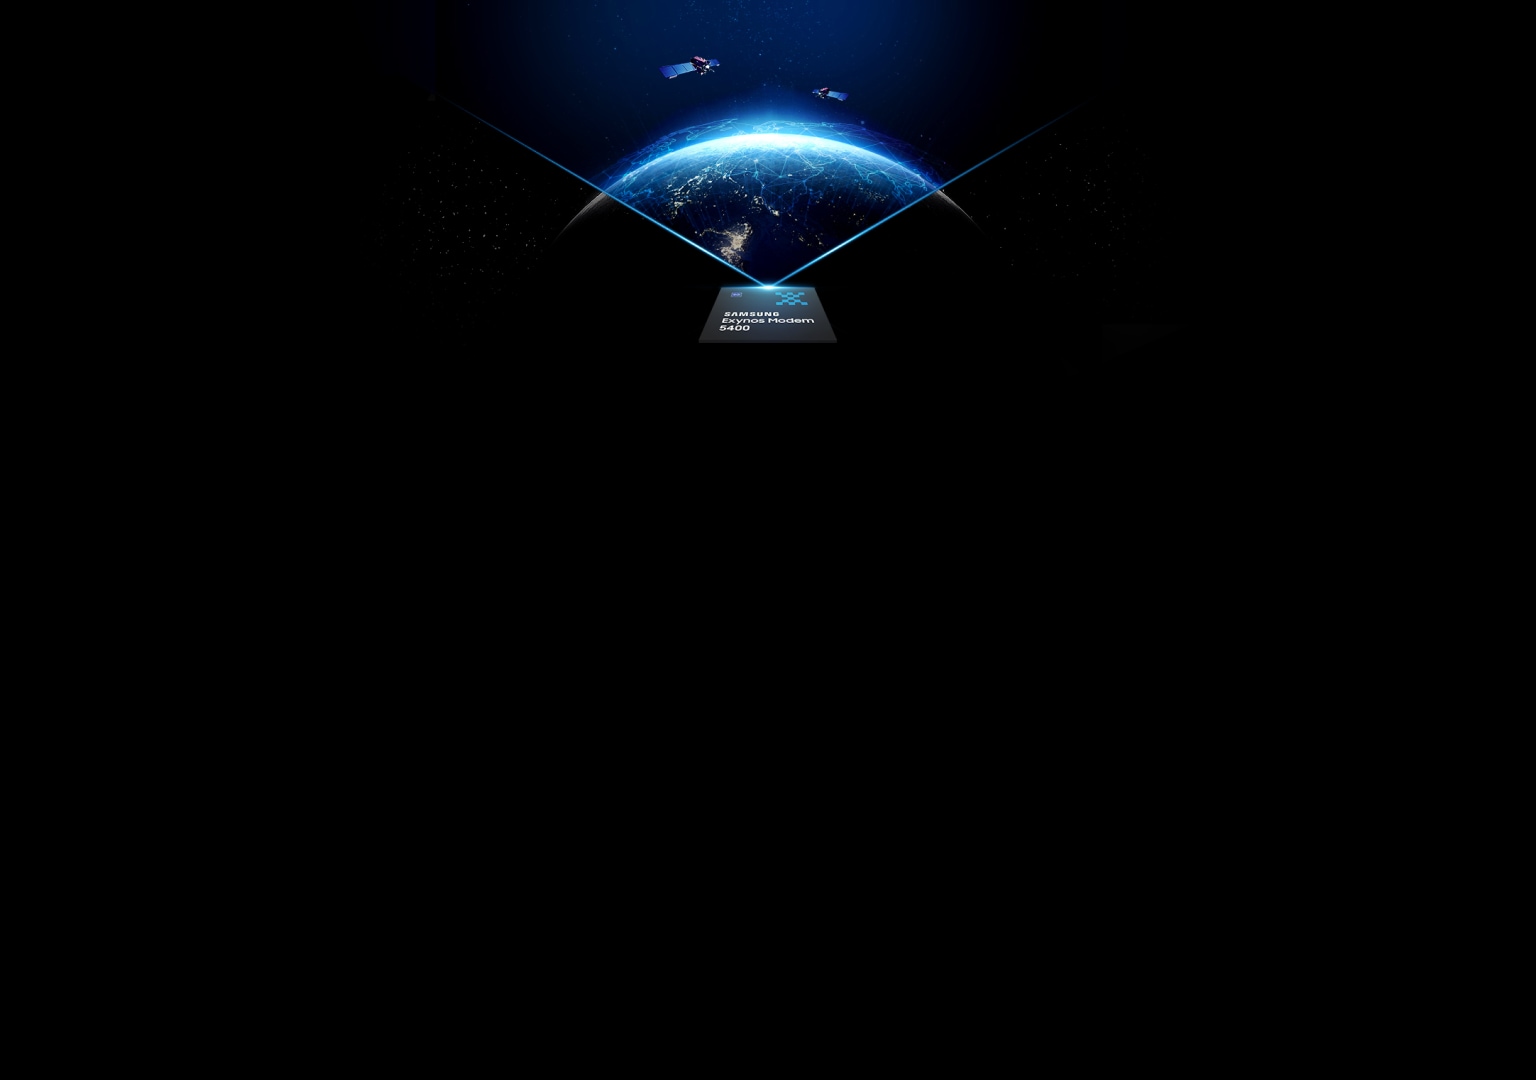 Earth as seen from orbit through a stylized diamond cutout, with 'Samsung Exynos Modem 5400'.